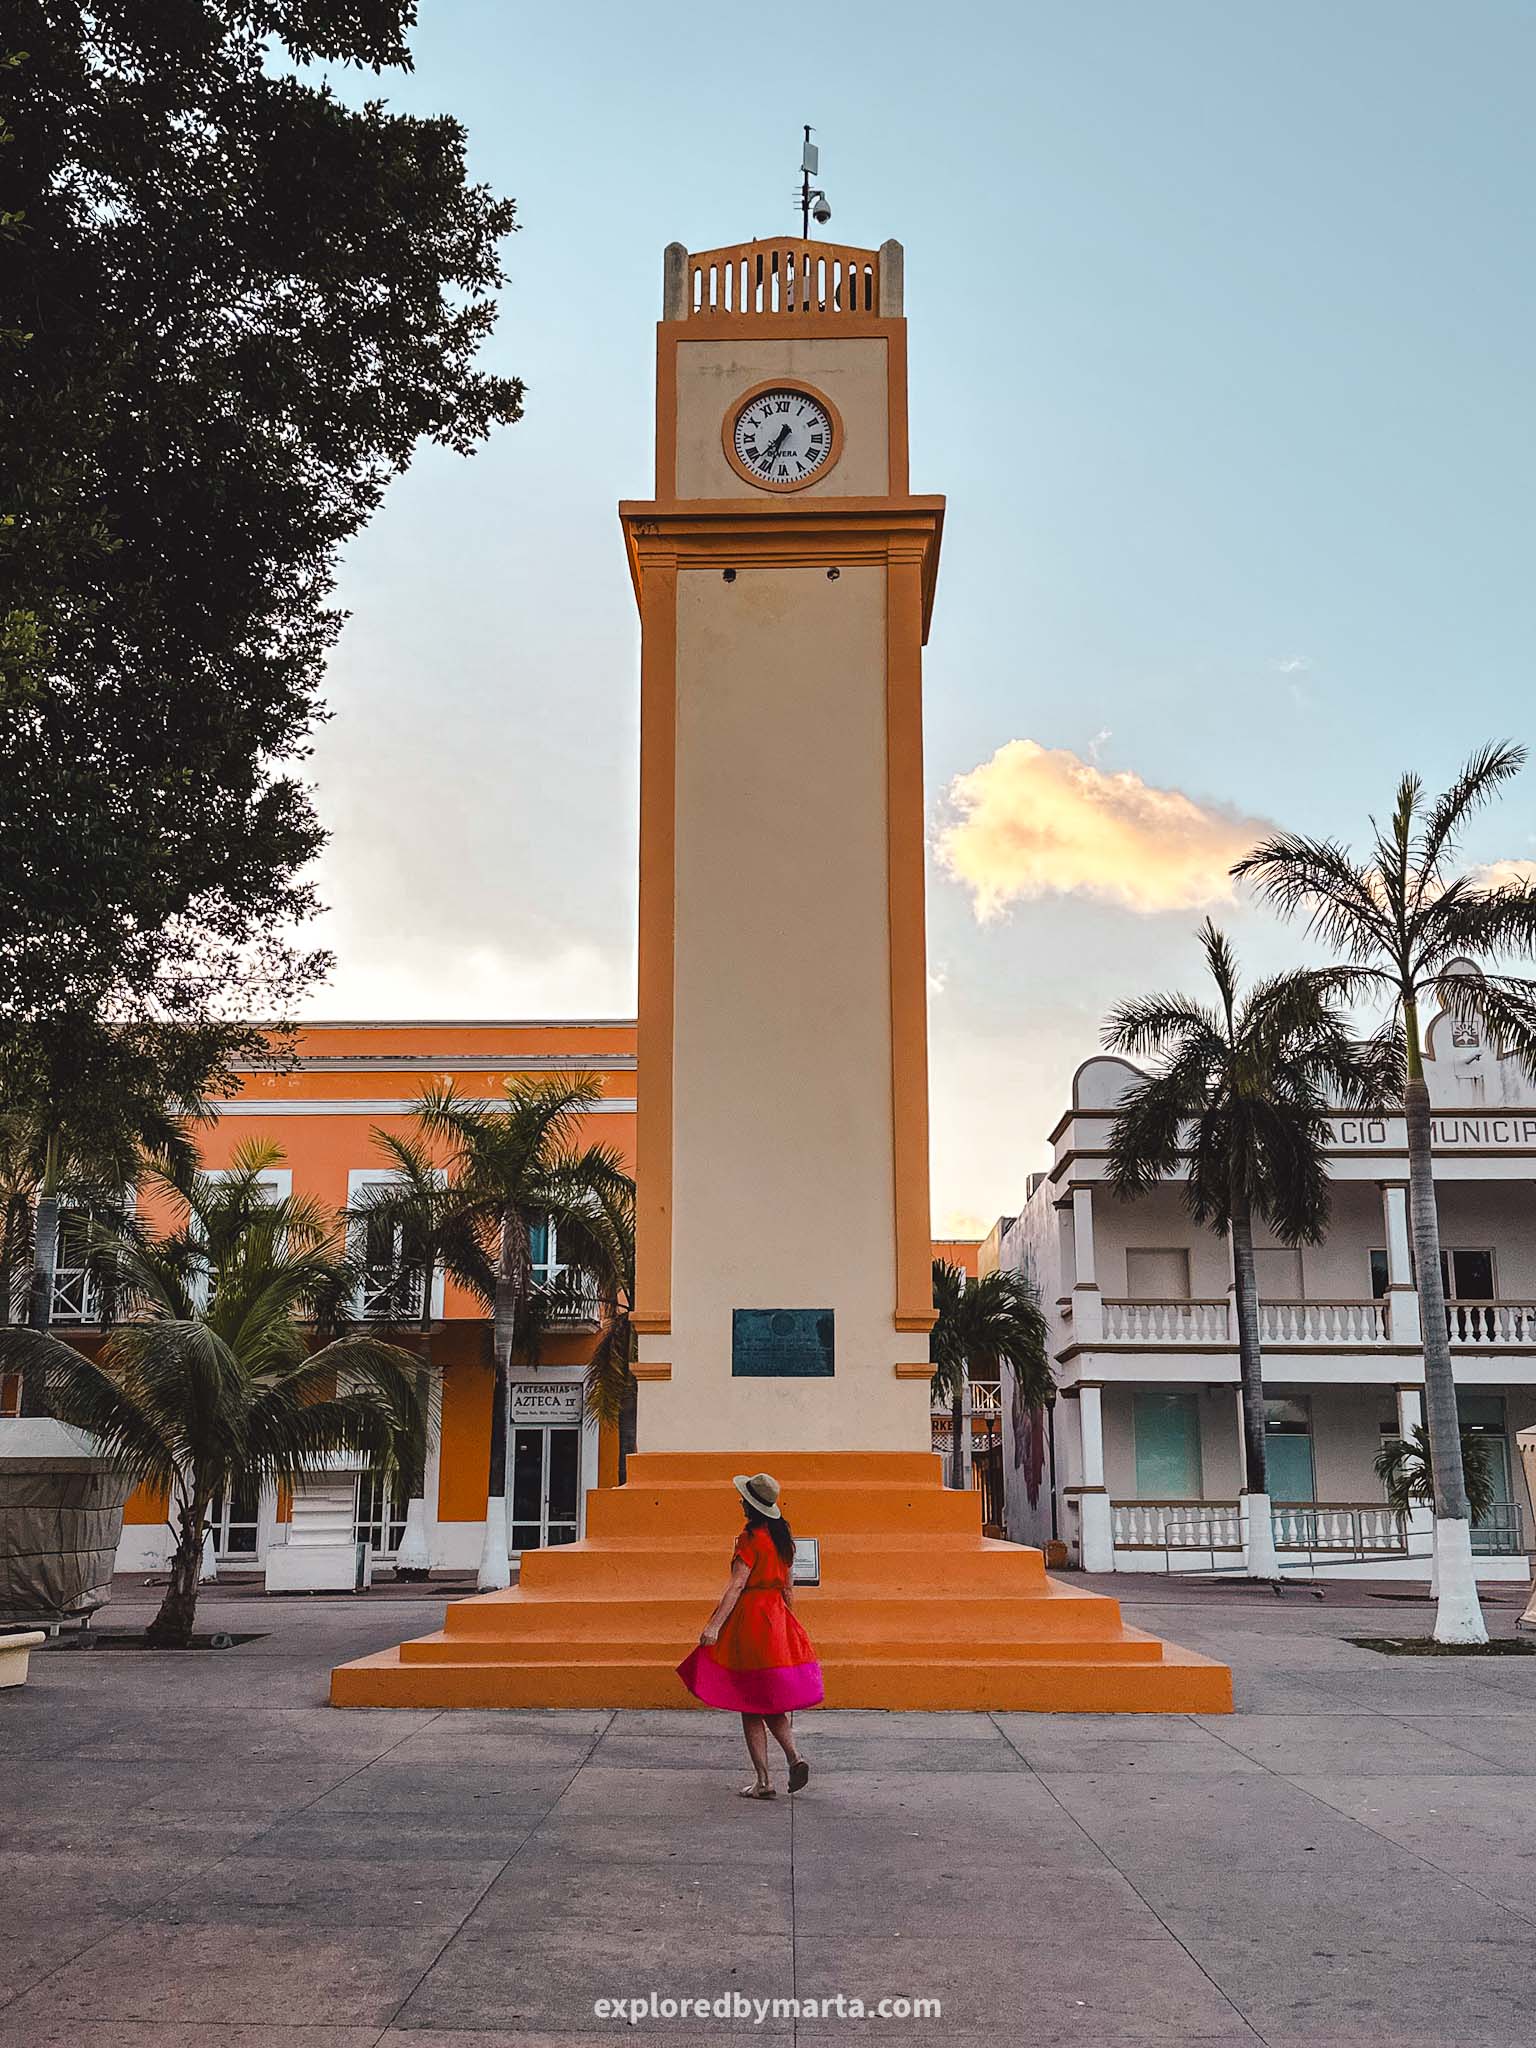 Cozumel, Mexico - Reloj Público Benito Juarez